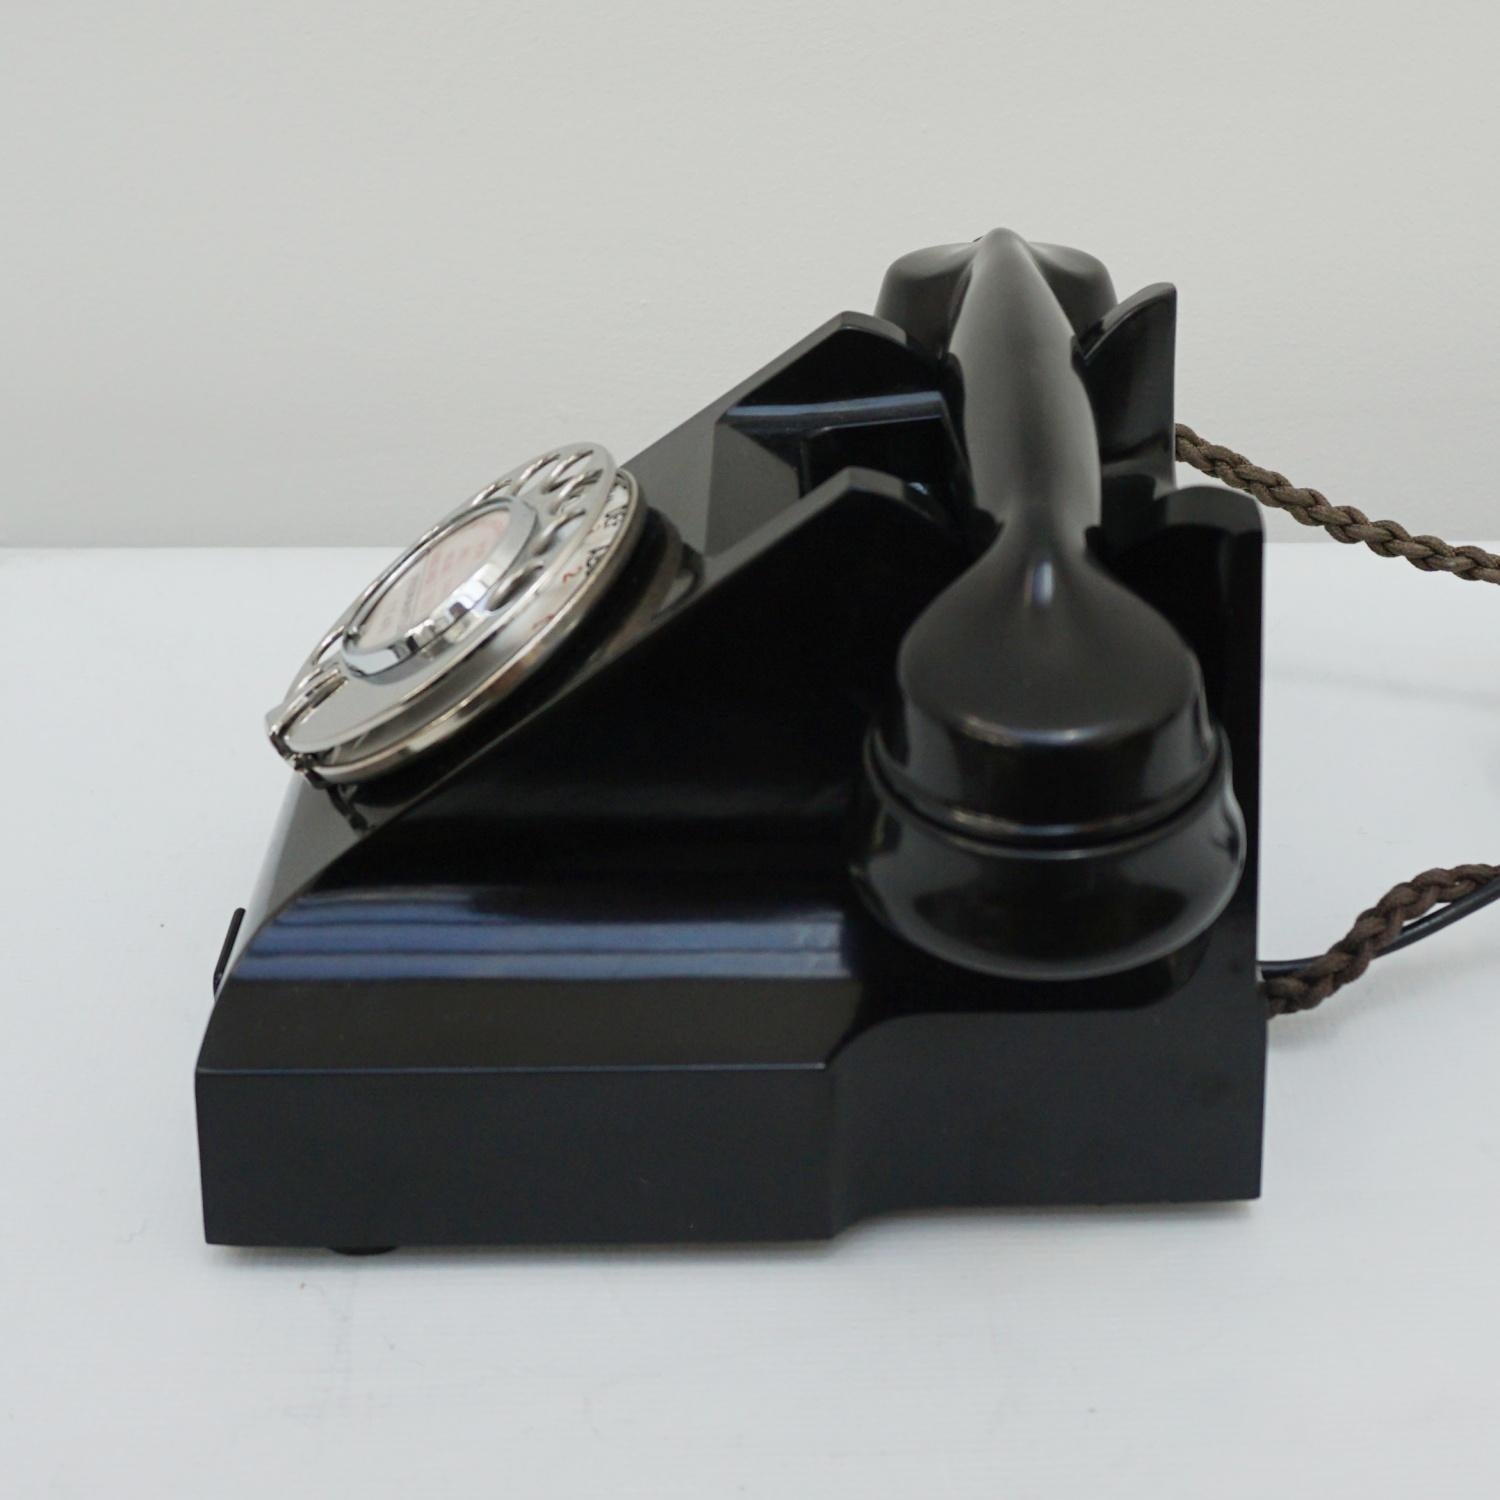 English Original GPO Model 332L Black Bakelite Telephone Full Working Order